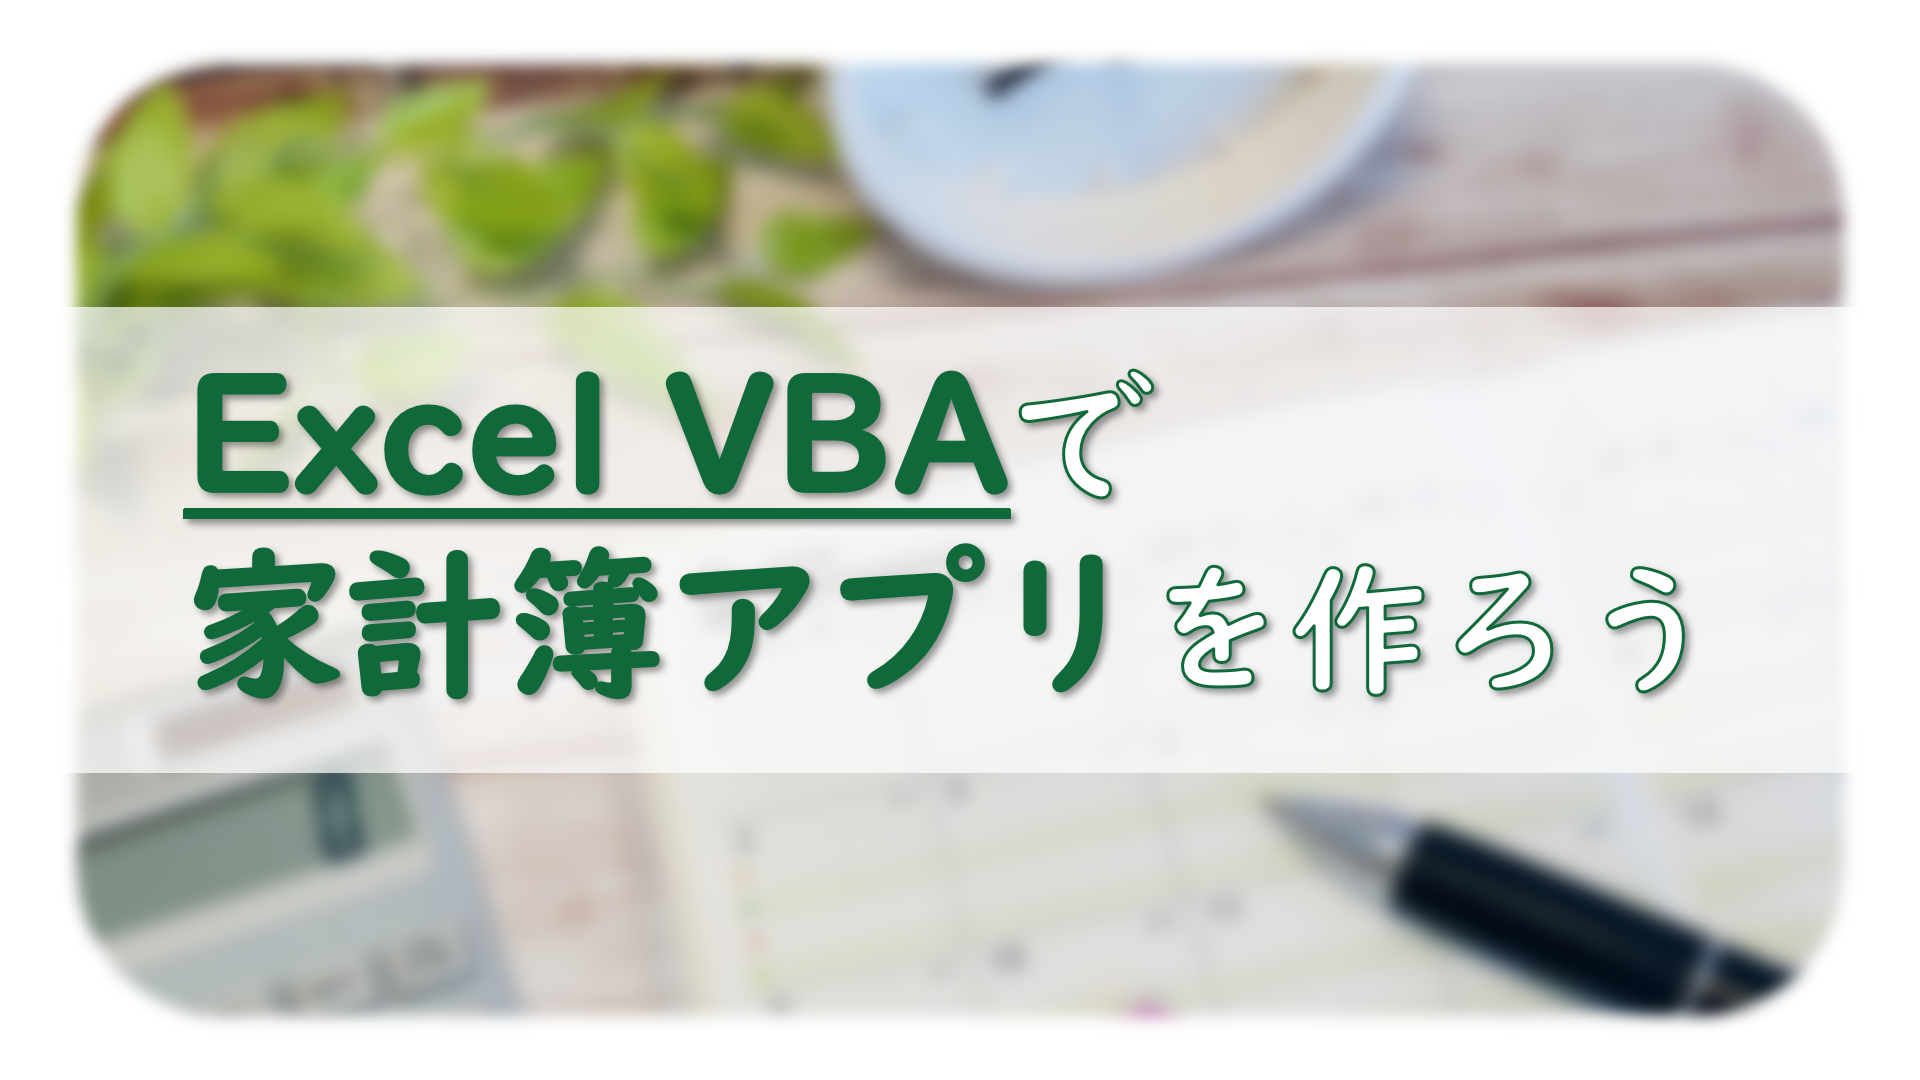 ExcelVBAで家計簿アプリを作ろう